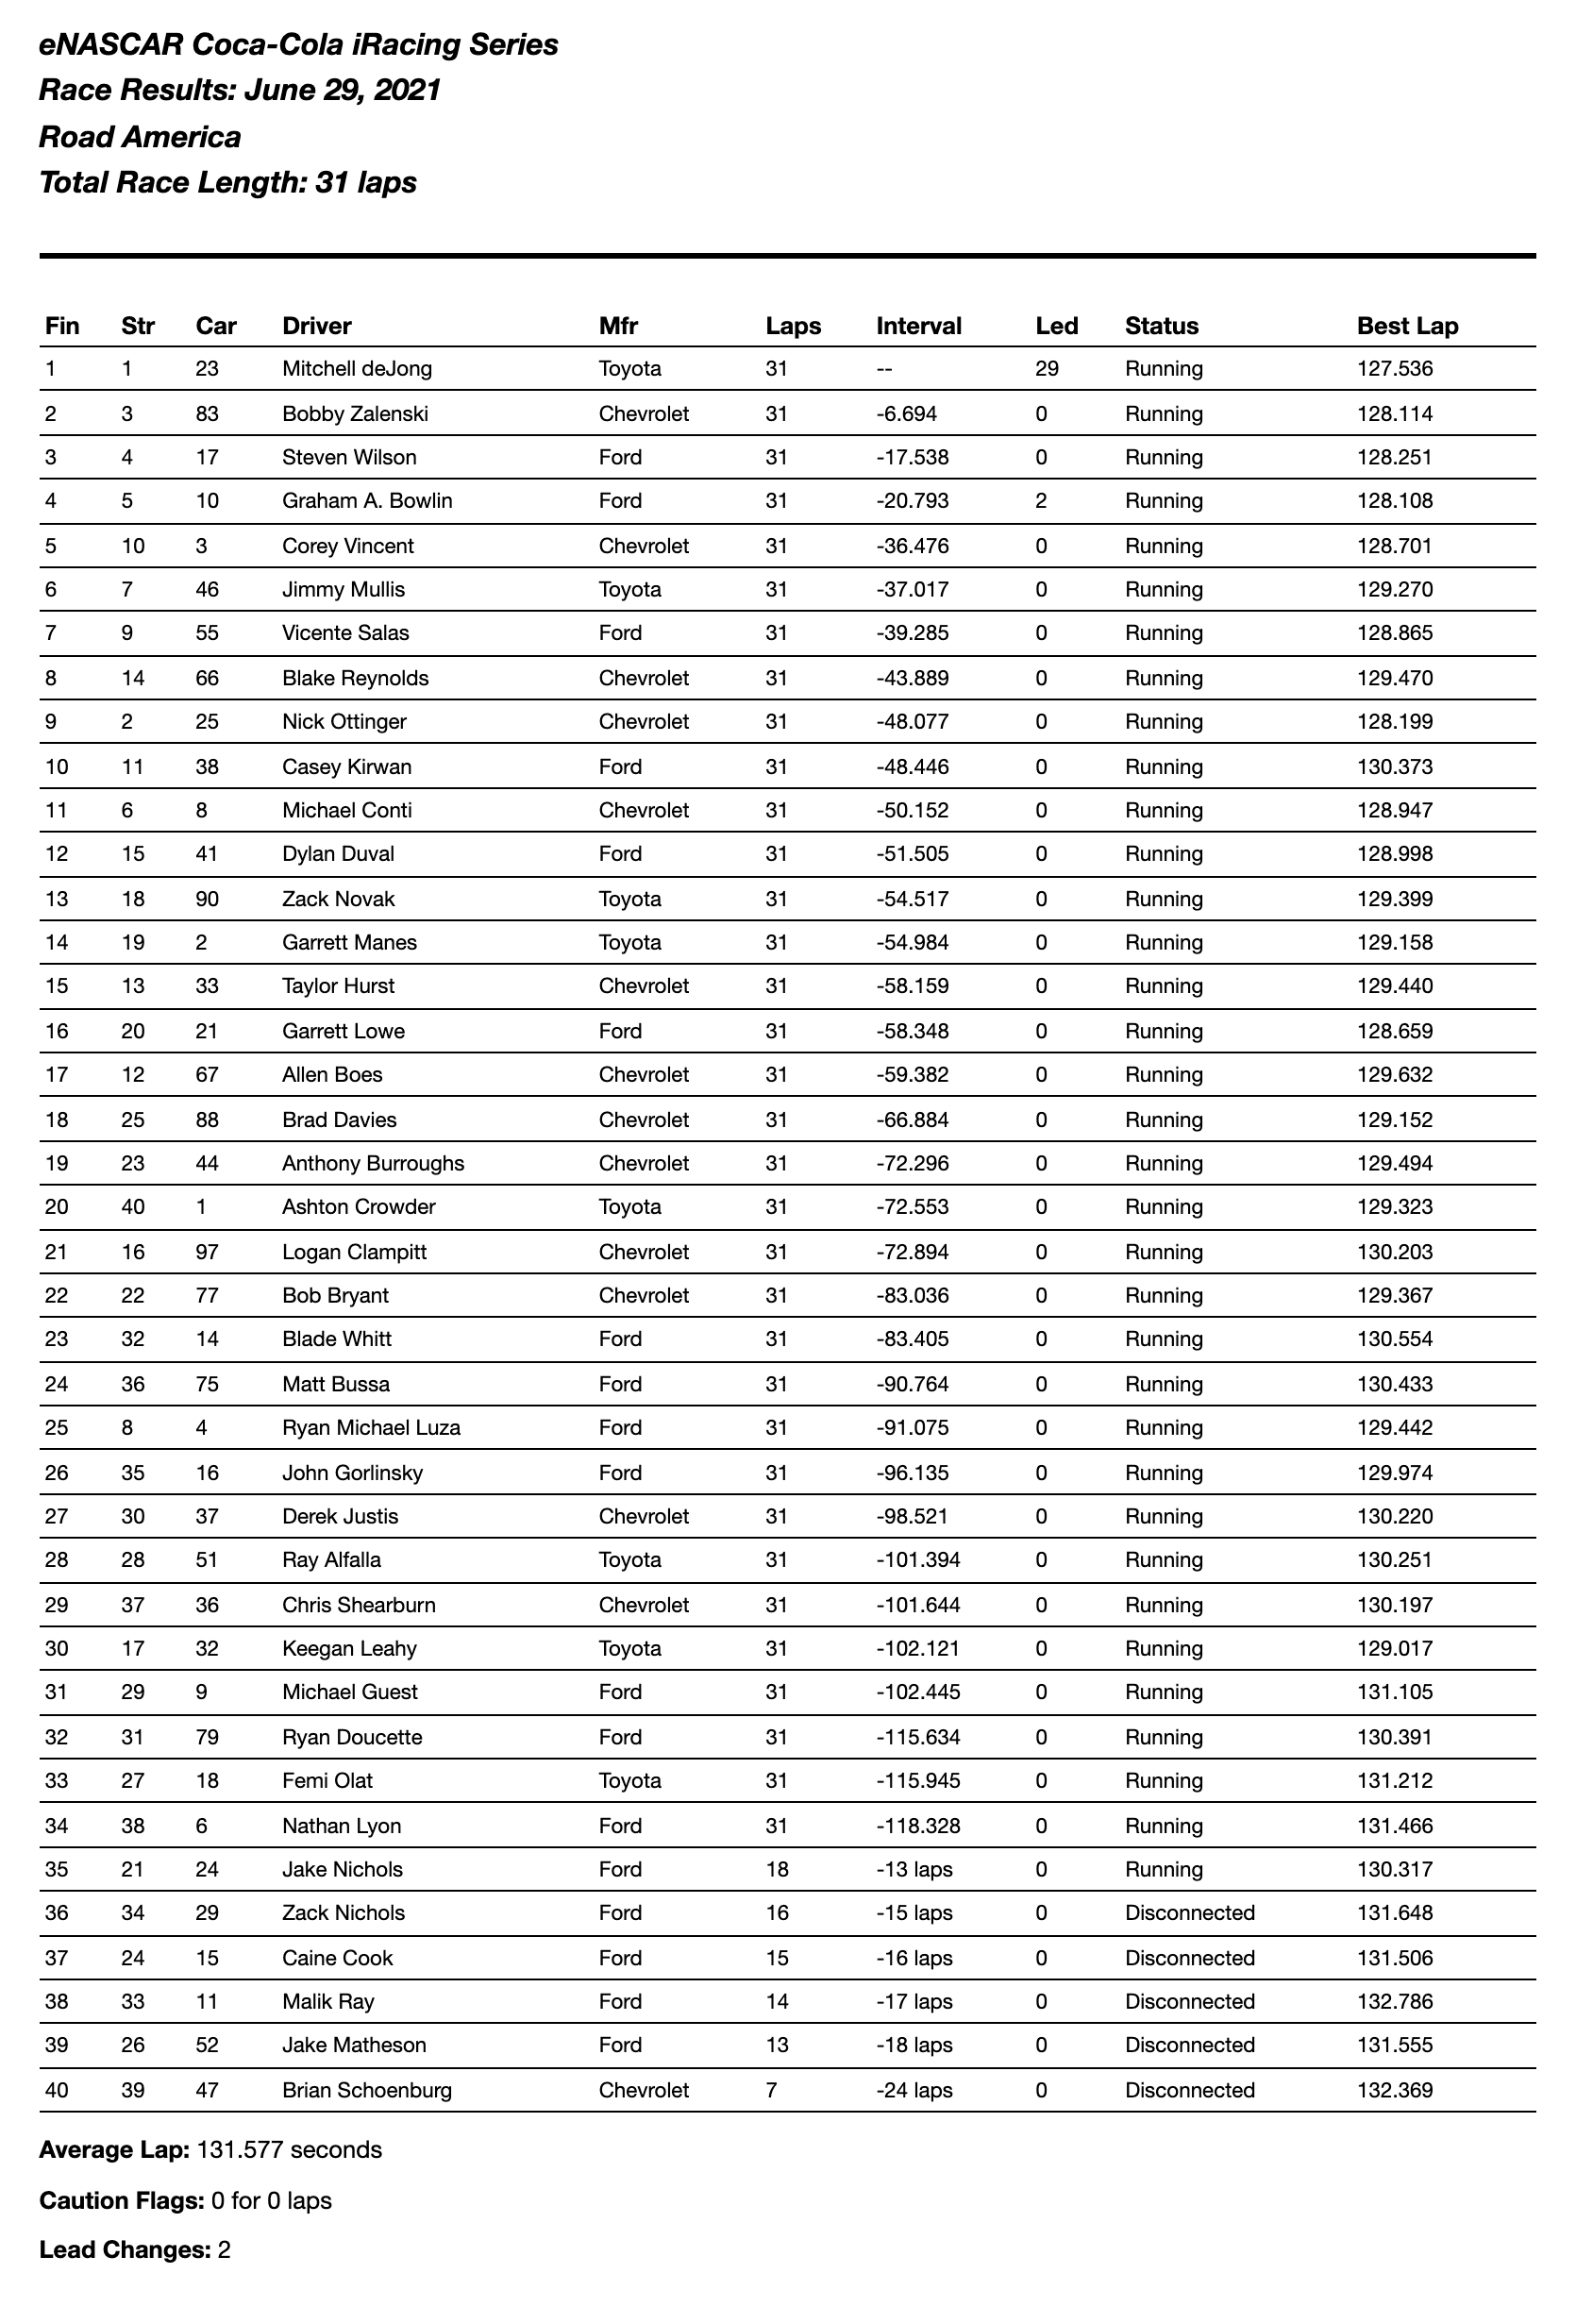 Road America Results Enascar Coke Series 2021